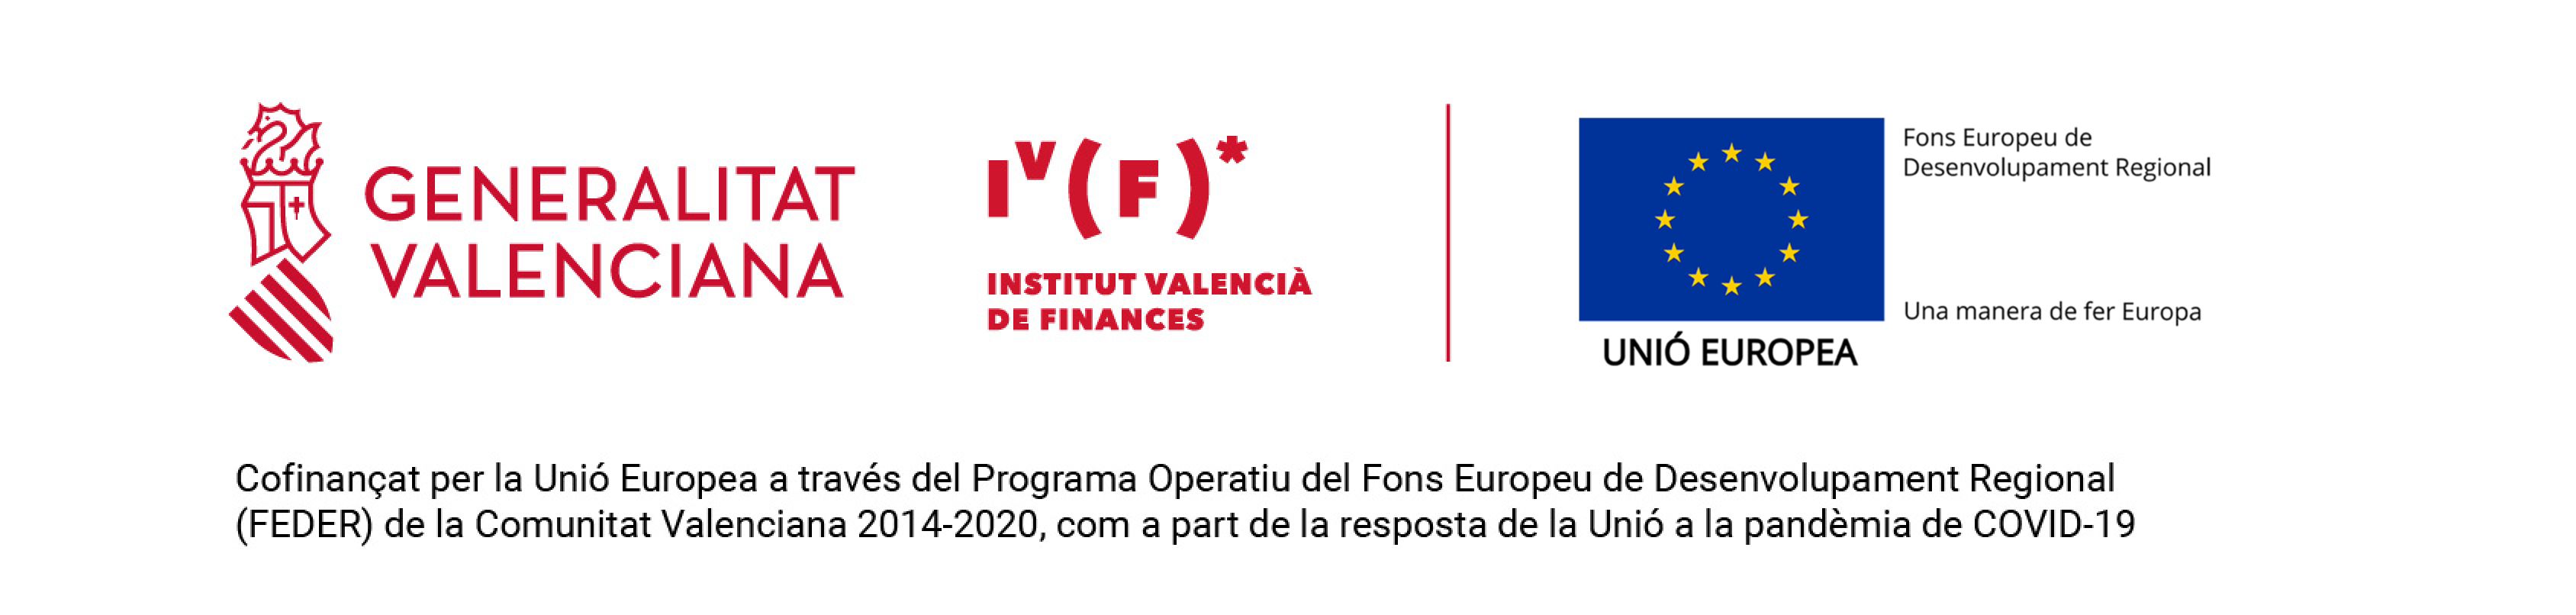 Convivencia IVF_UE con texto 2022 _valenciano AR.png